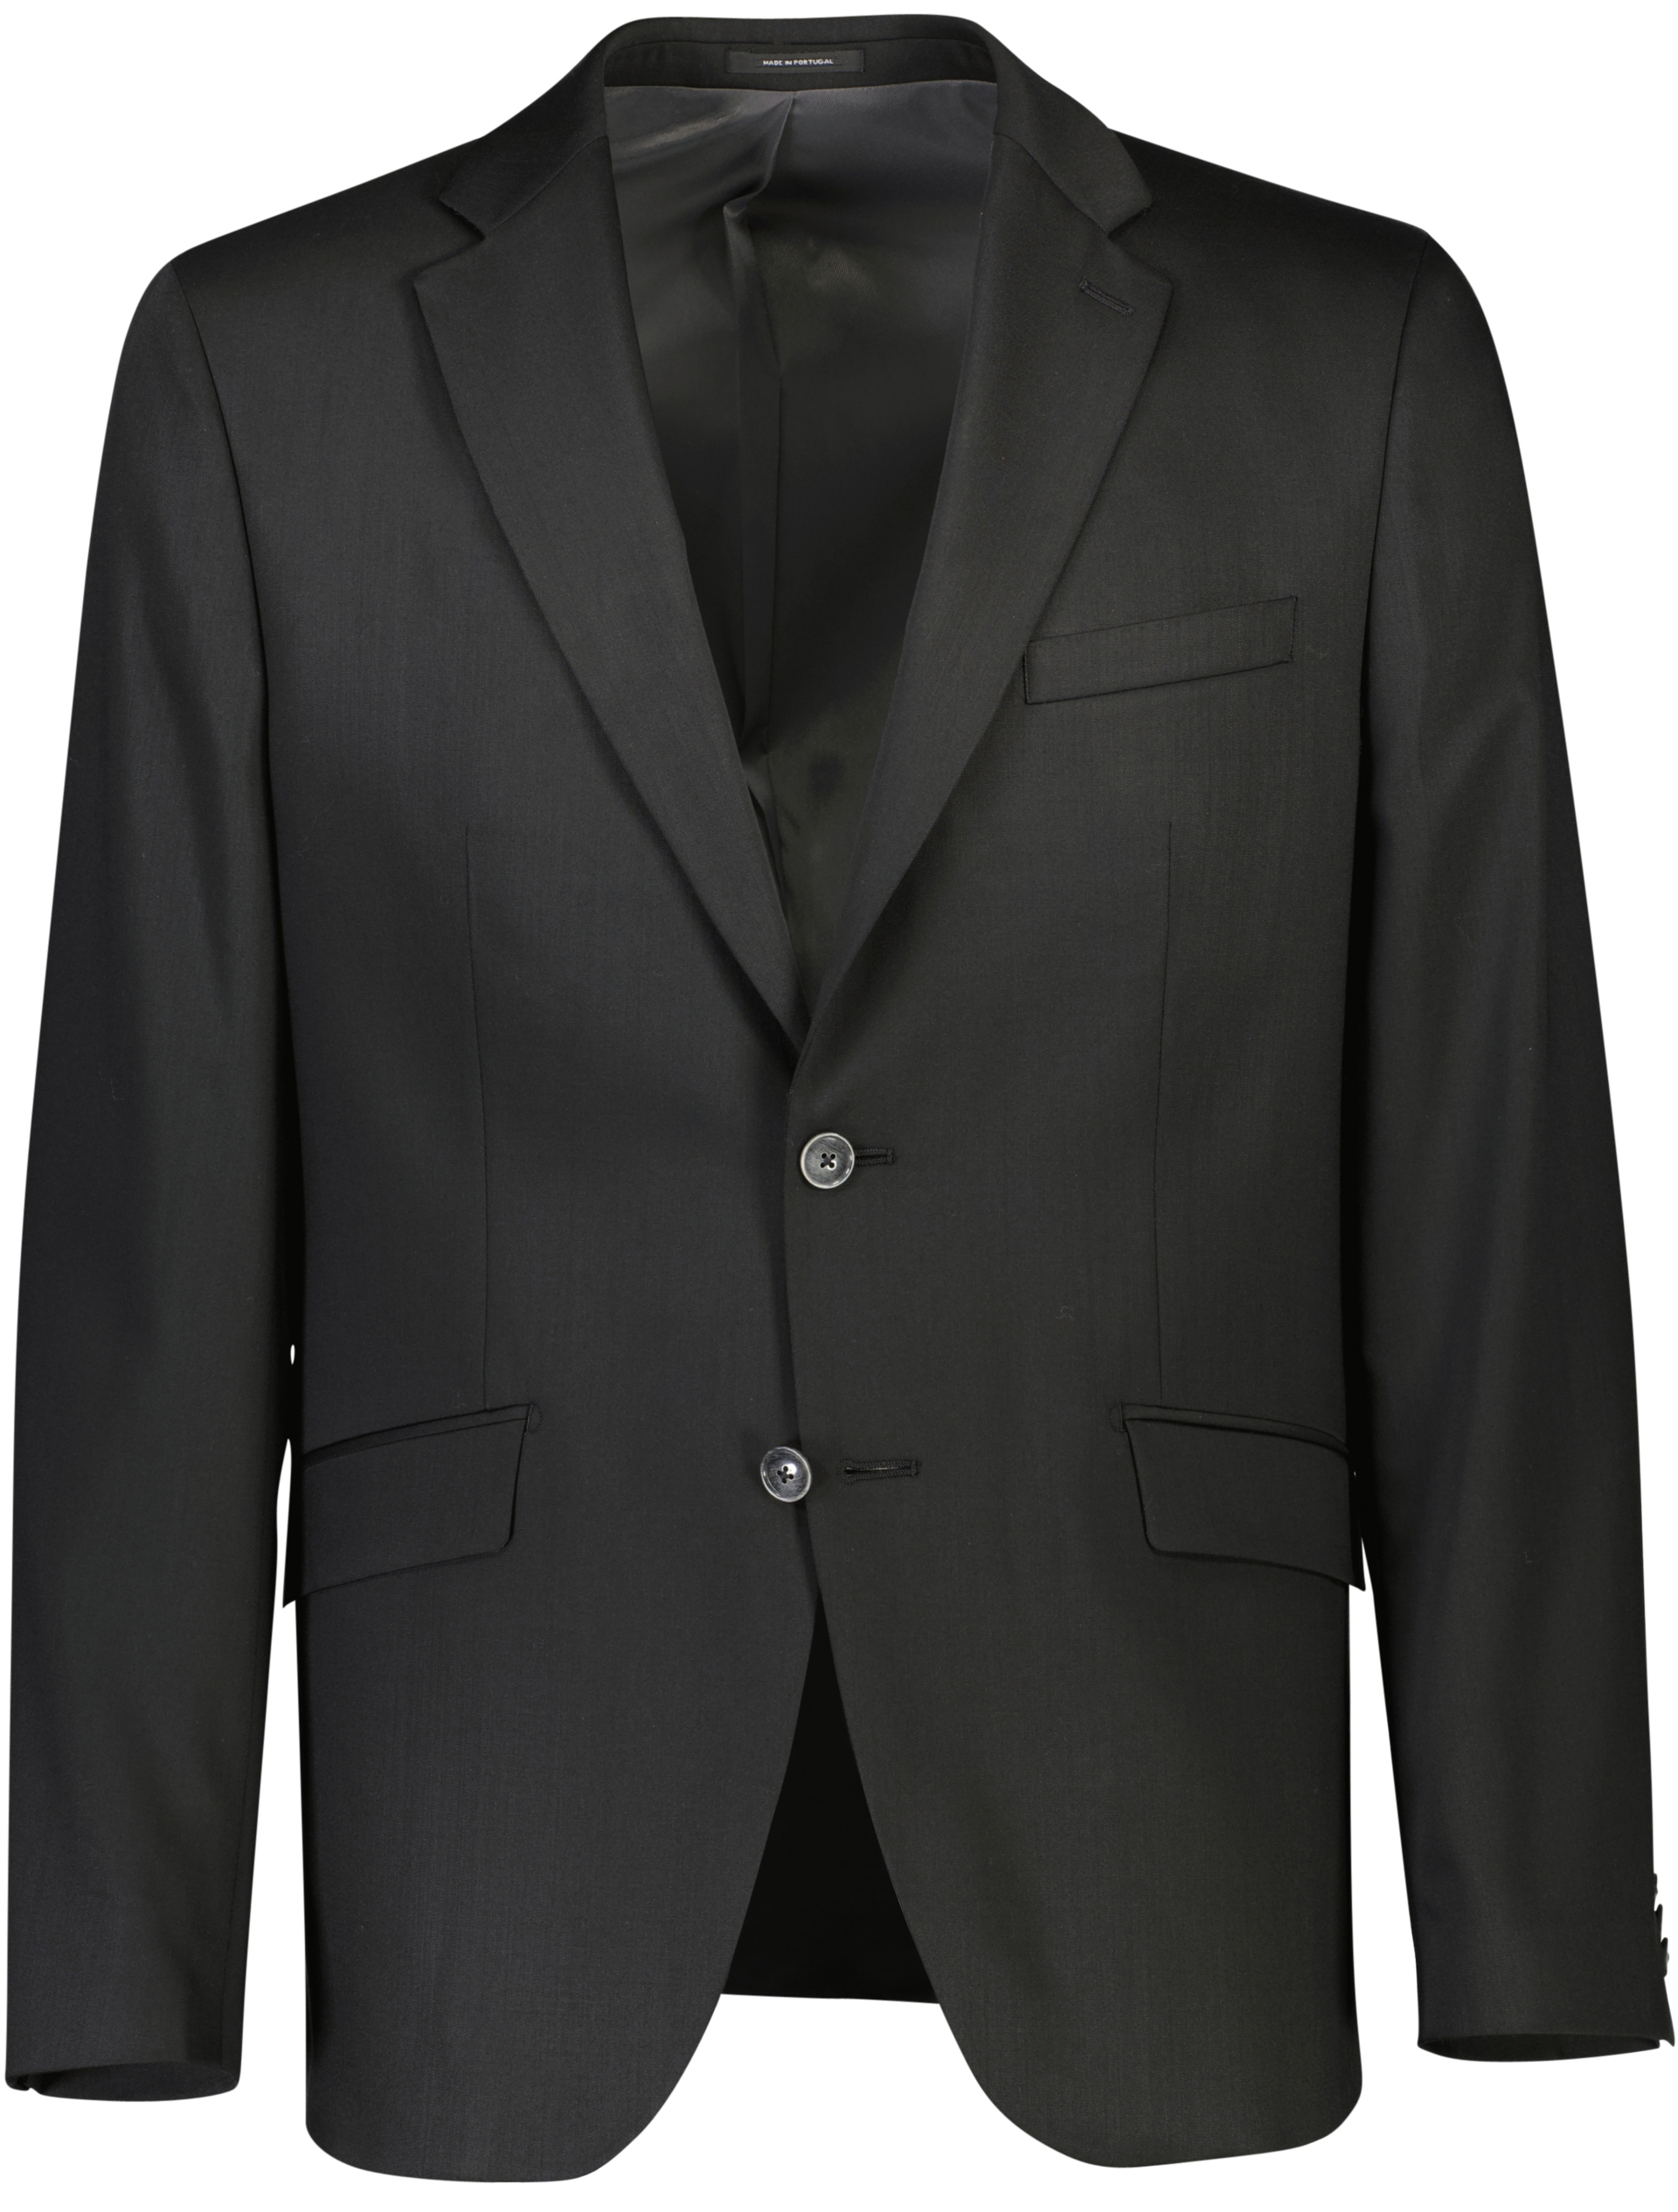 Lindbergh Suit jacket black / black